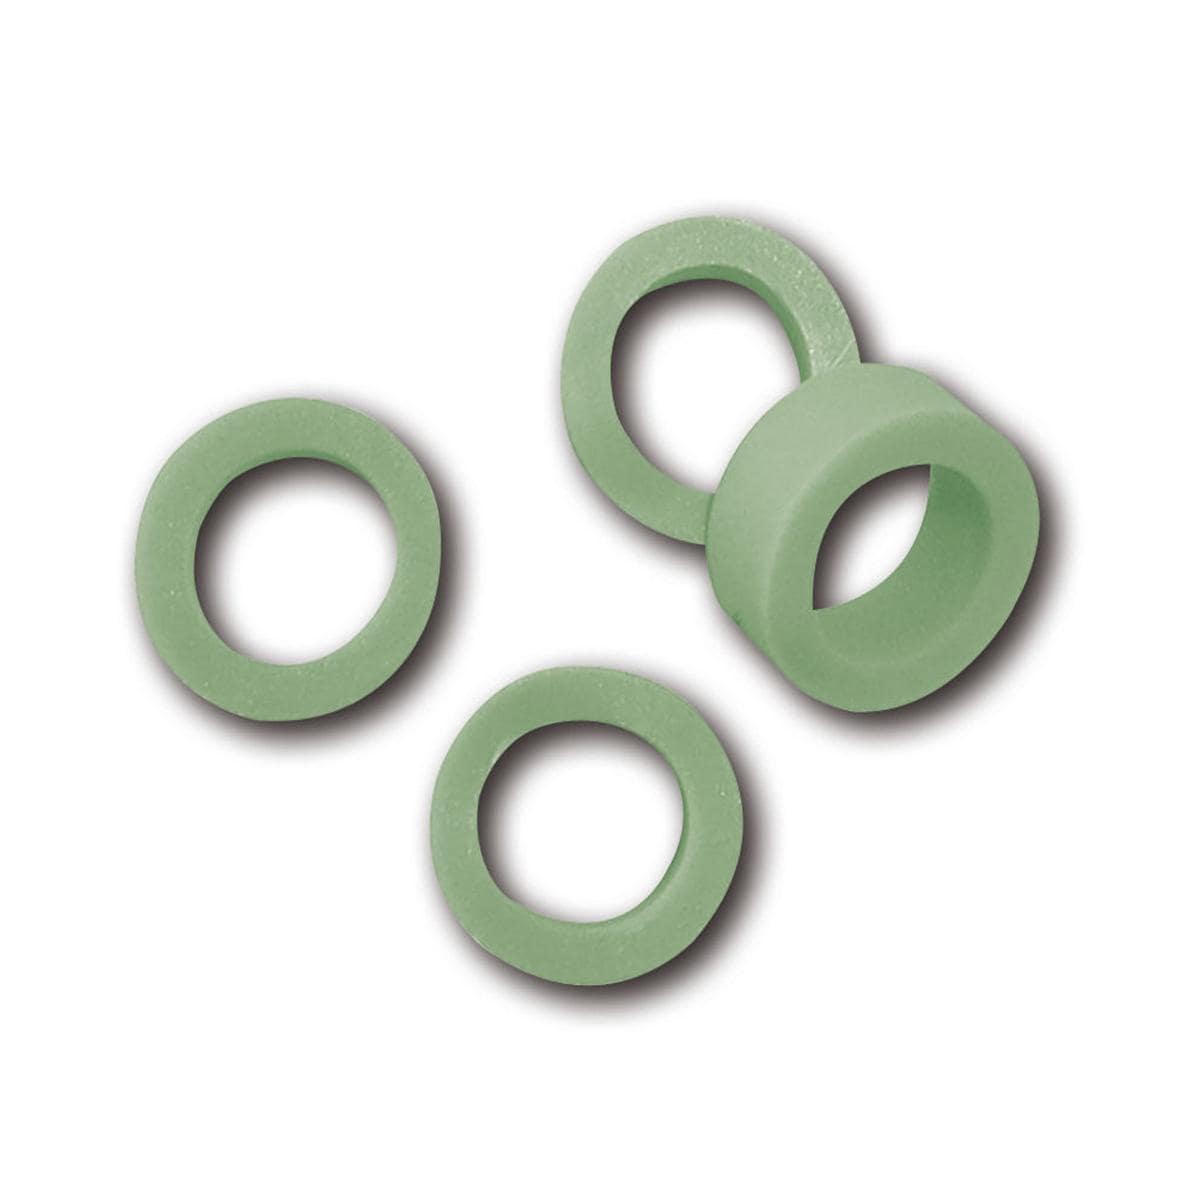 Maxi ID-Ringe - Grün, Packung 25 Stück